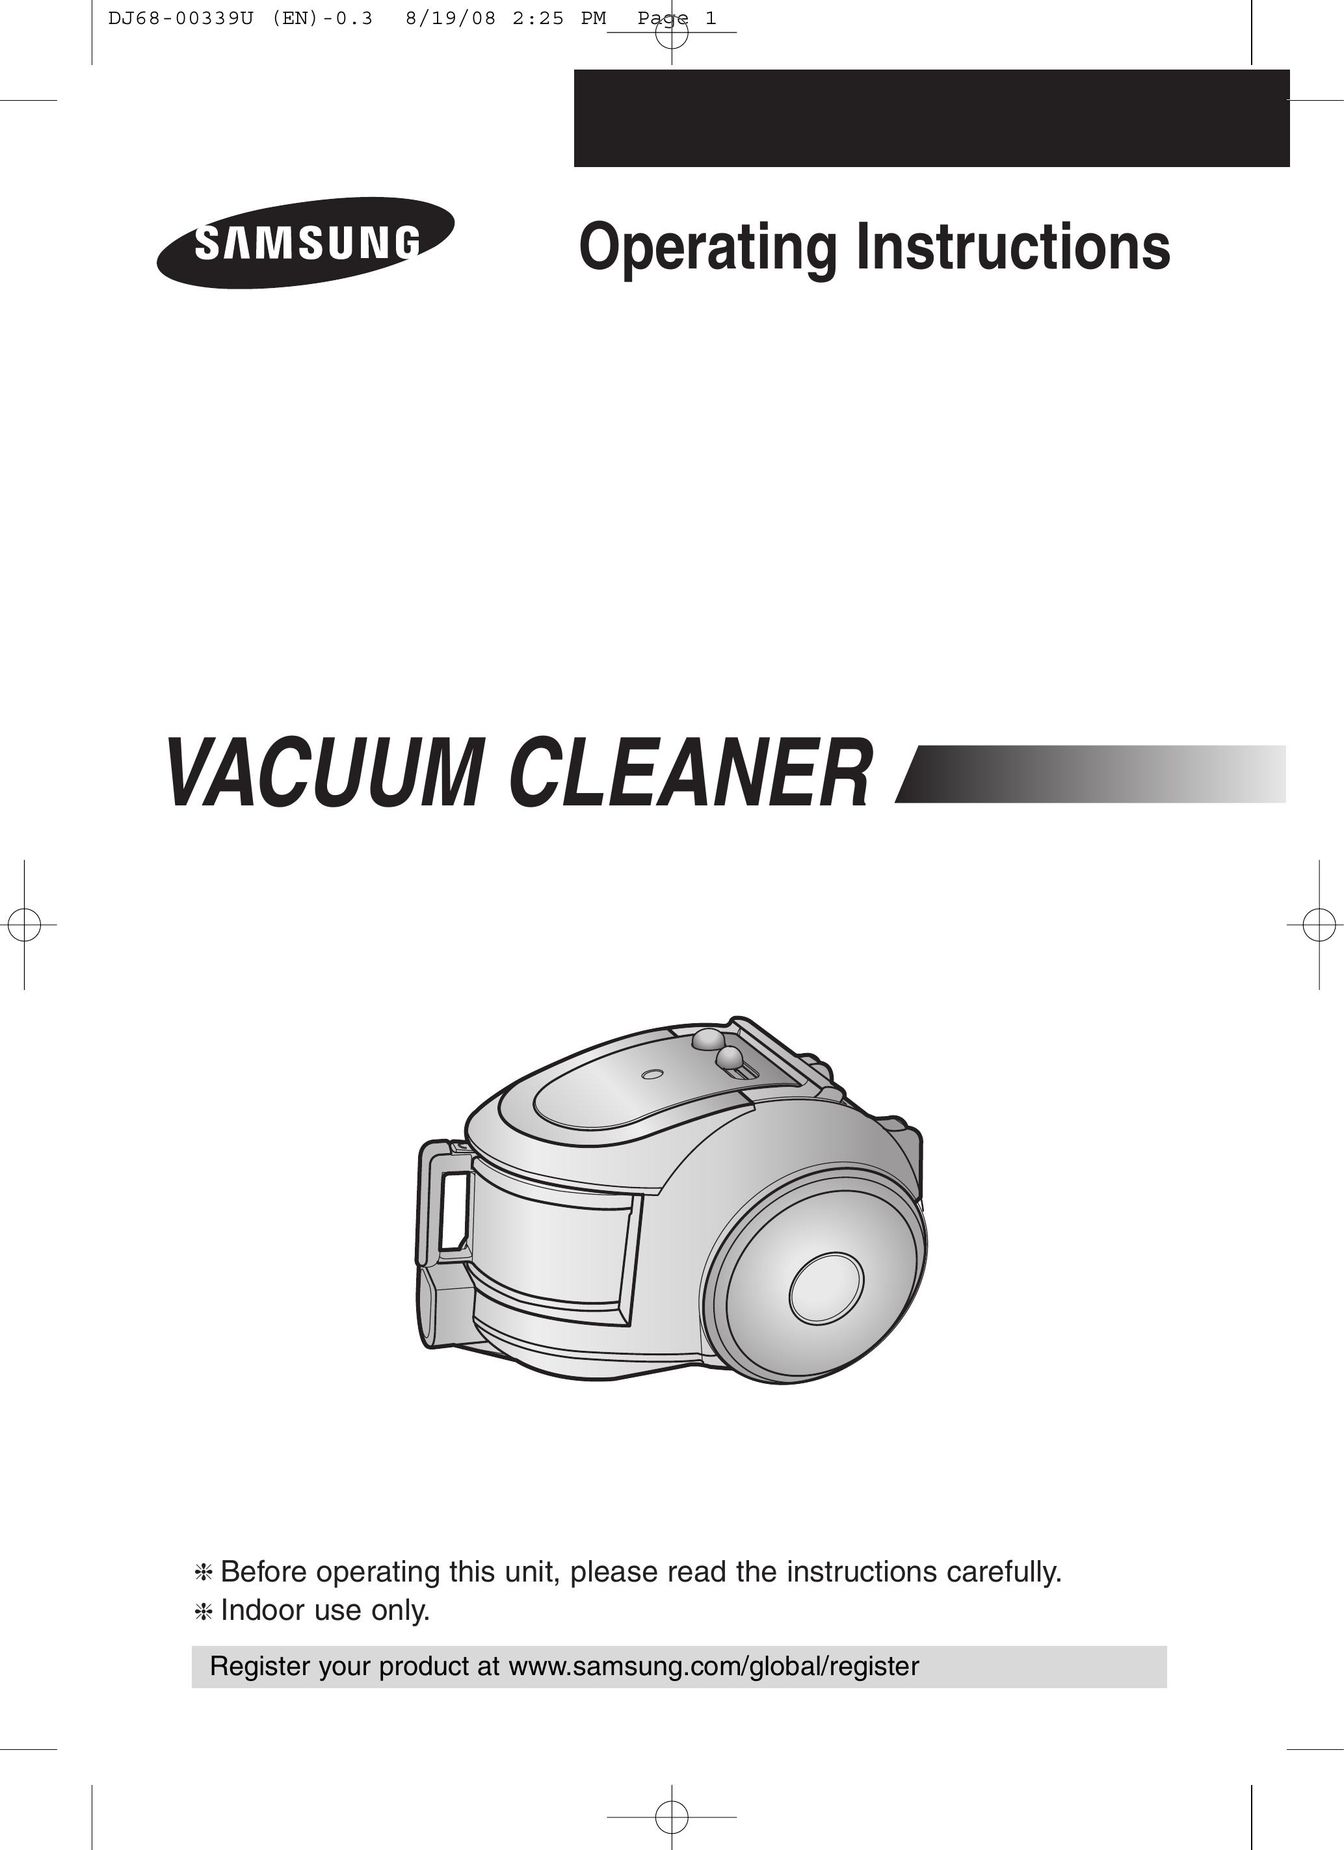 Samsung SC65A1 Vacuum Cleaner User Manual